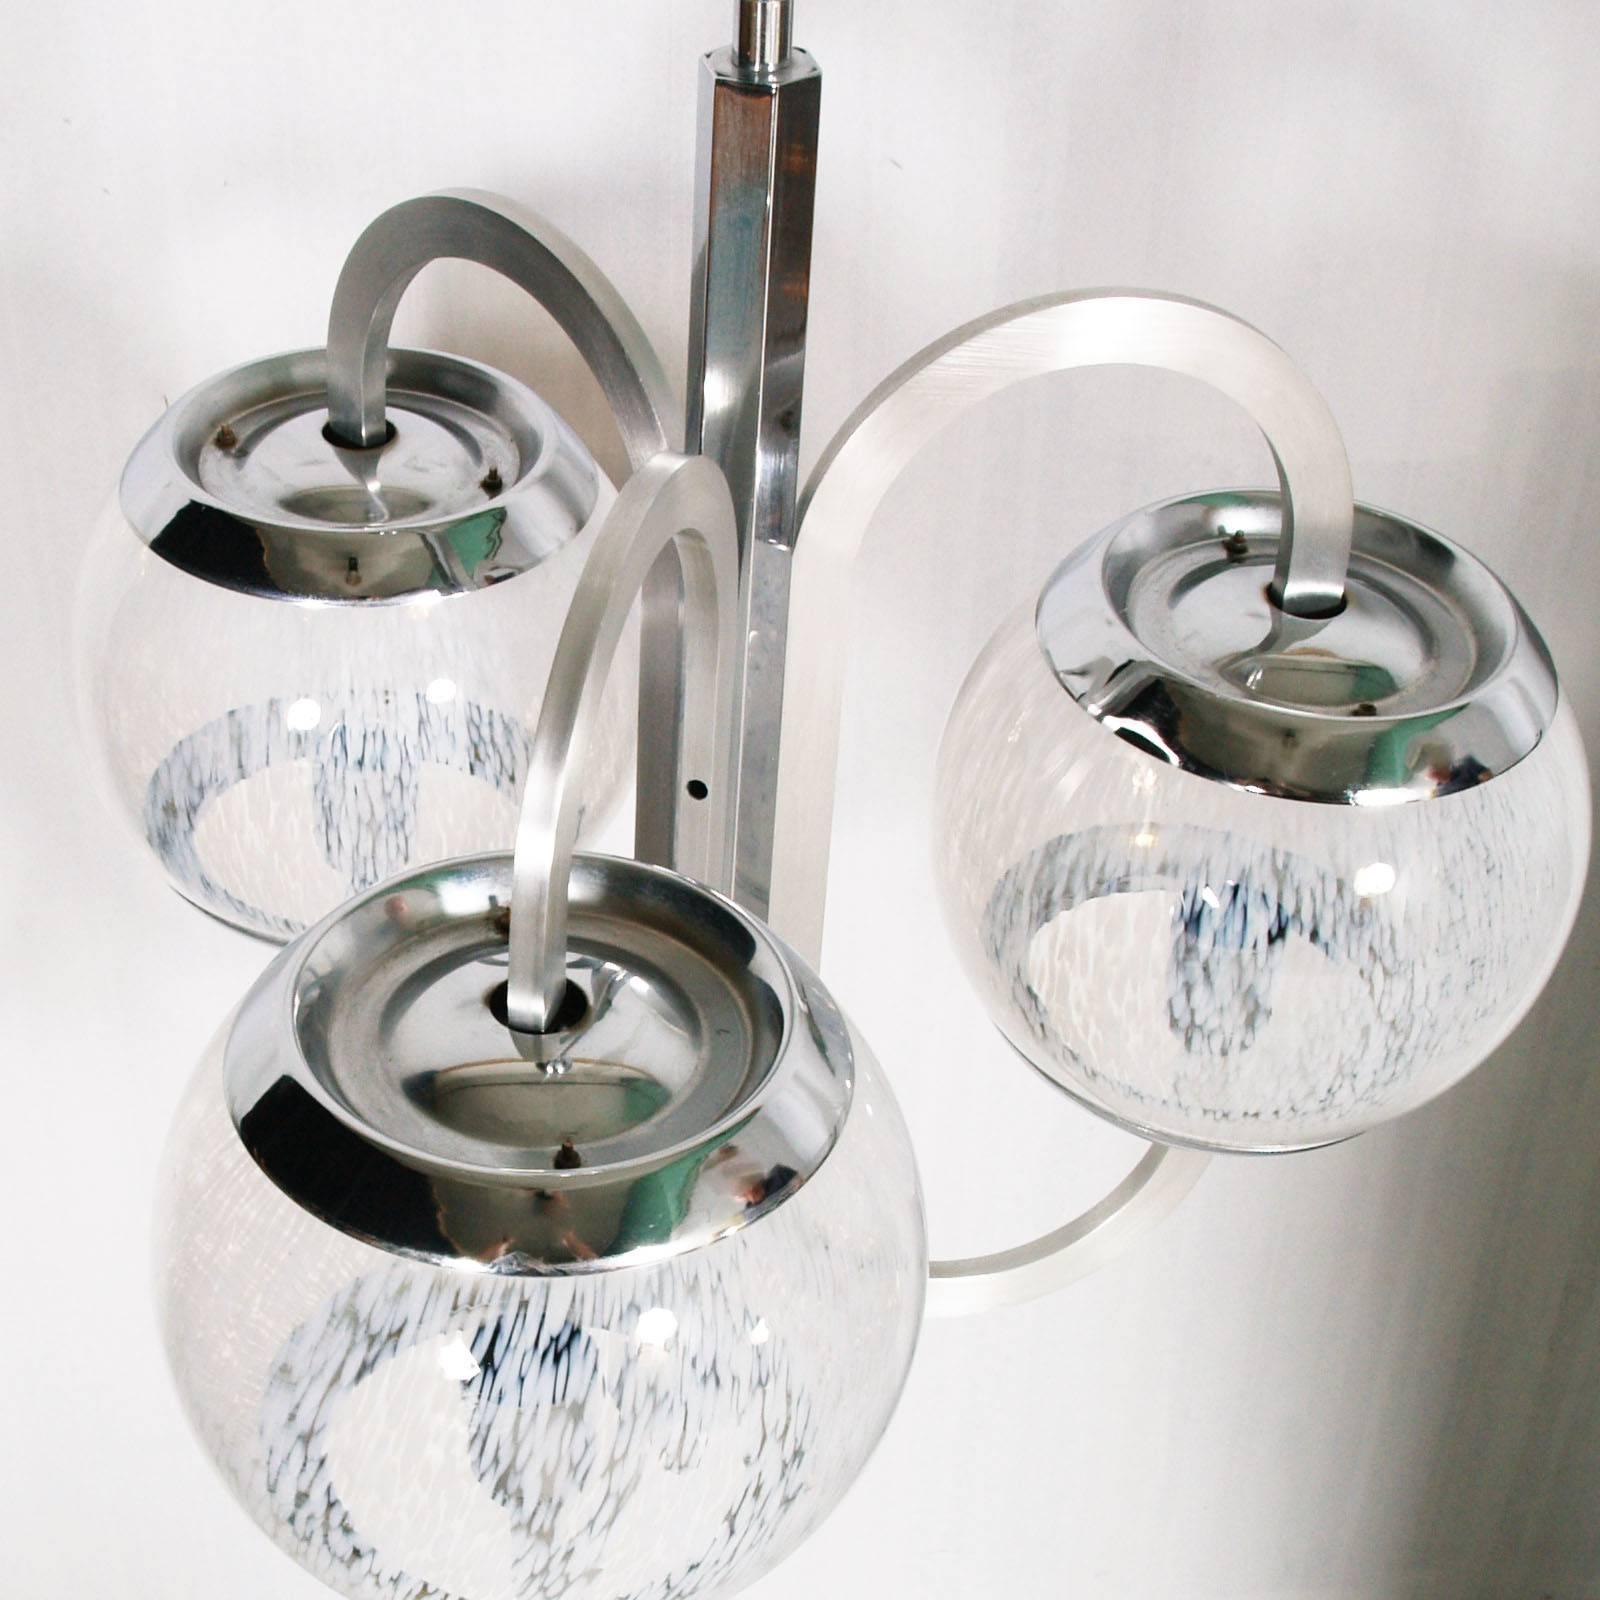 1960s modernist steel chromed and aluminium pendant chandelier with three large Murano Pulegoso glass 'BUBBLE', Carlo Nason attributable
Measures cm: Height 100, diameter 55 (ball diameter 20).
 